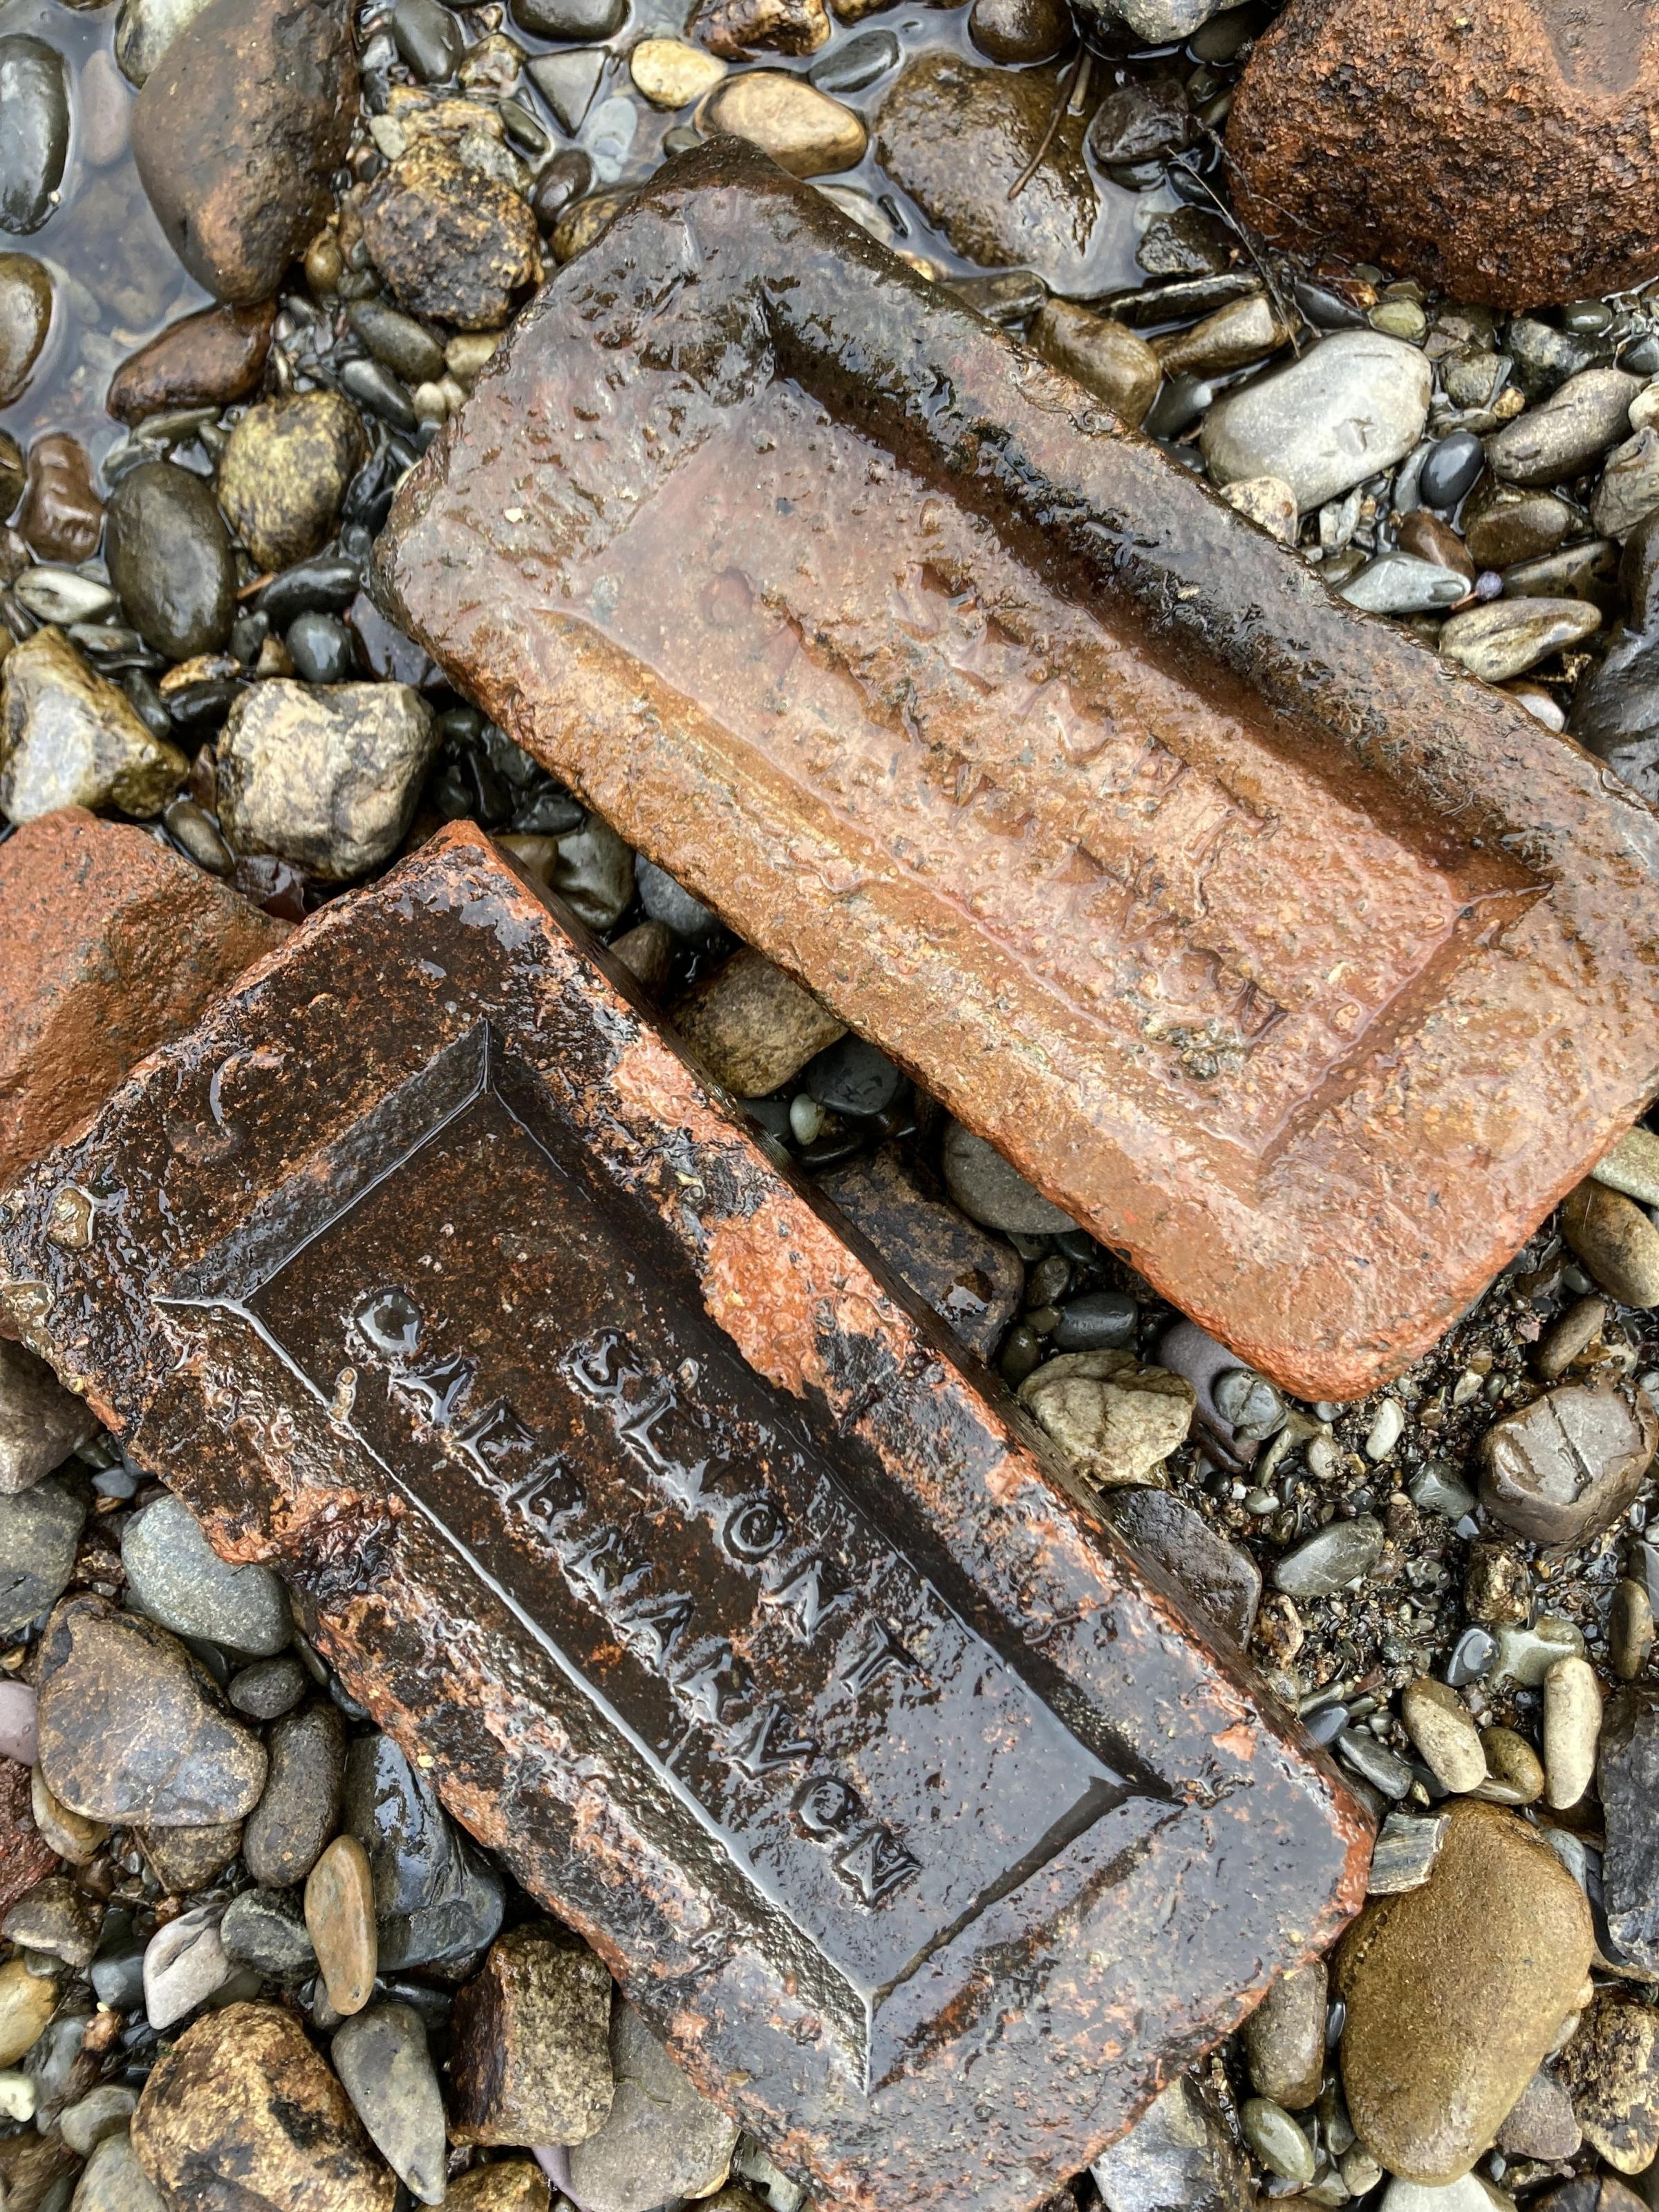 Seiont Bricks from Caernarfon found on the river bank during the walk